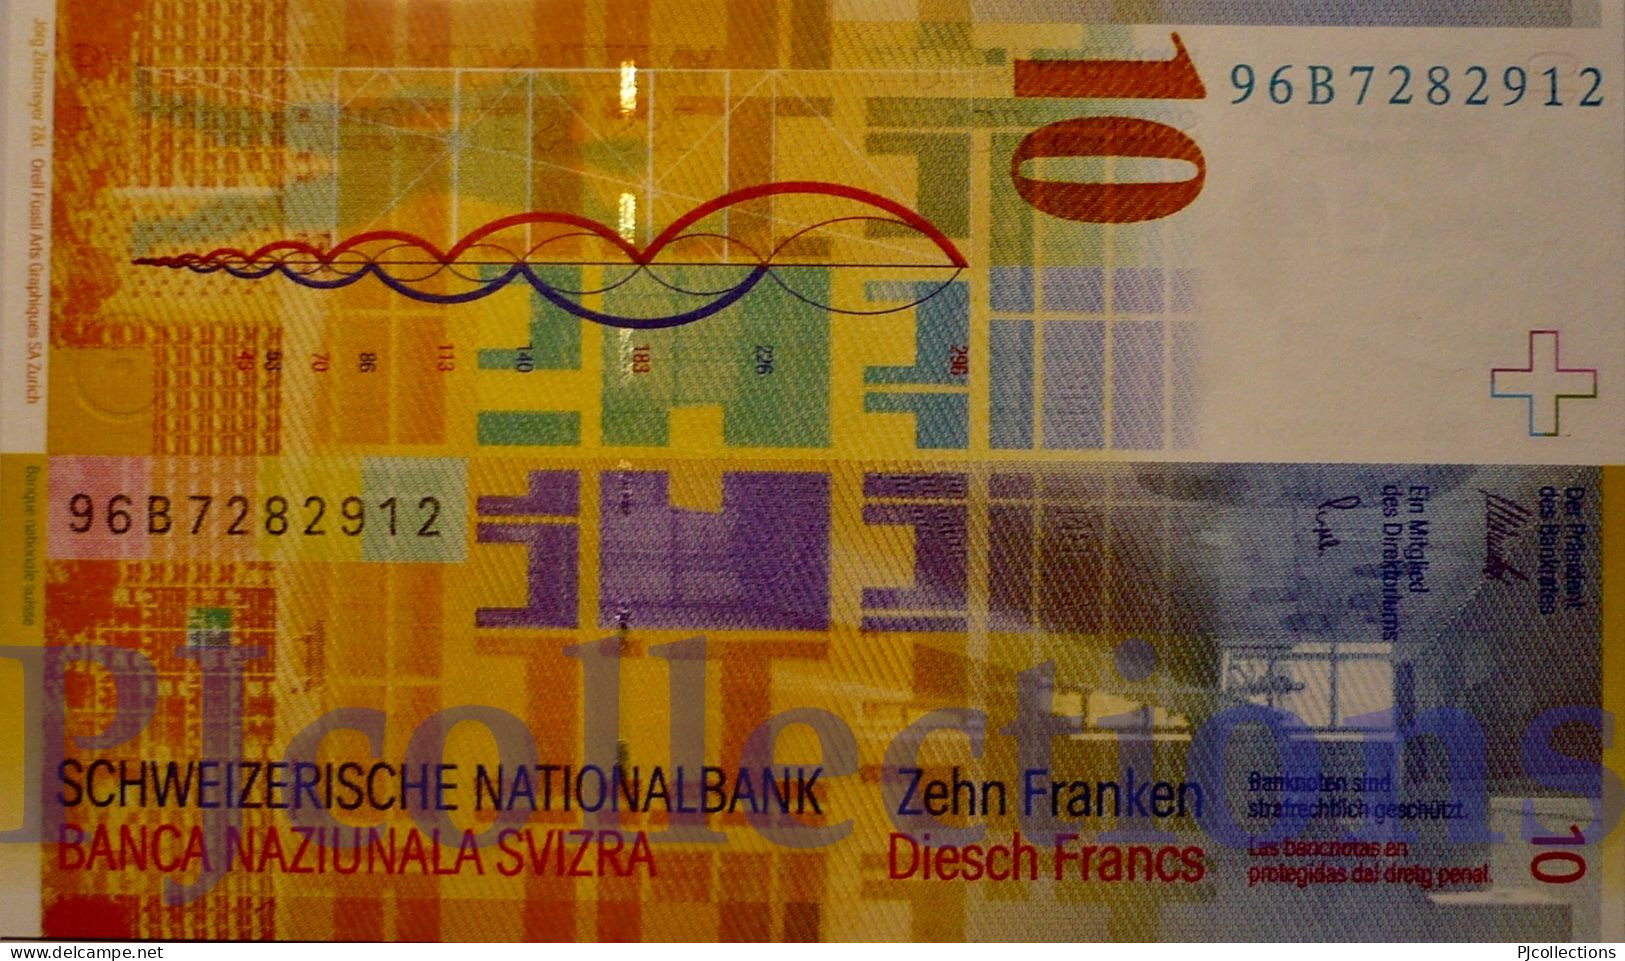 SWITZERLAND 10 FRANKEN 1996 PICK 66b UNC - Switzerland